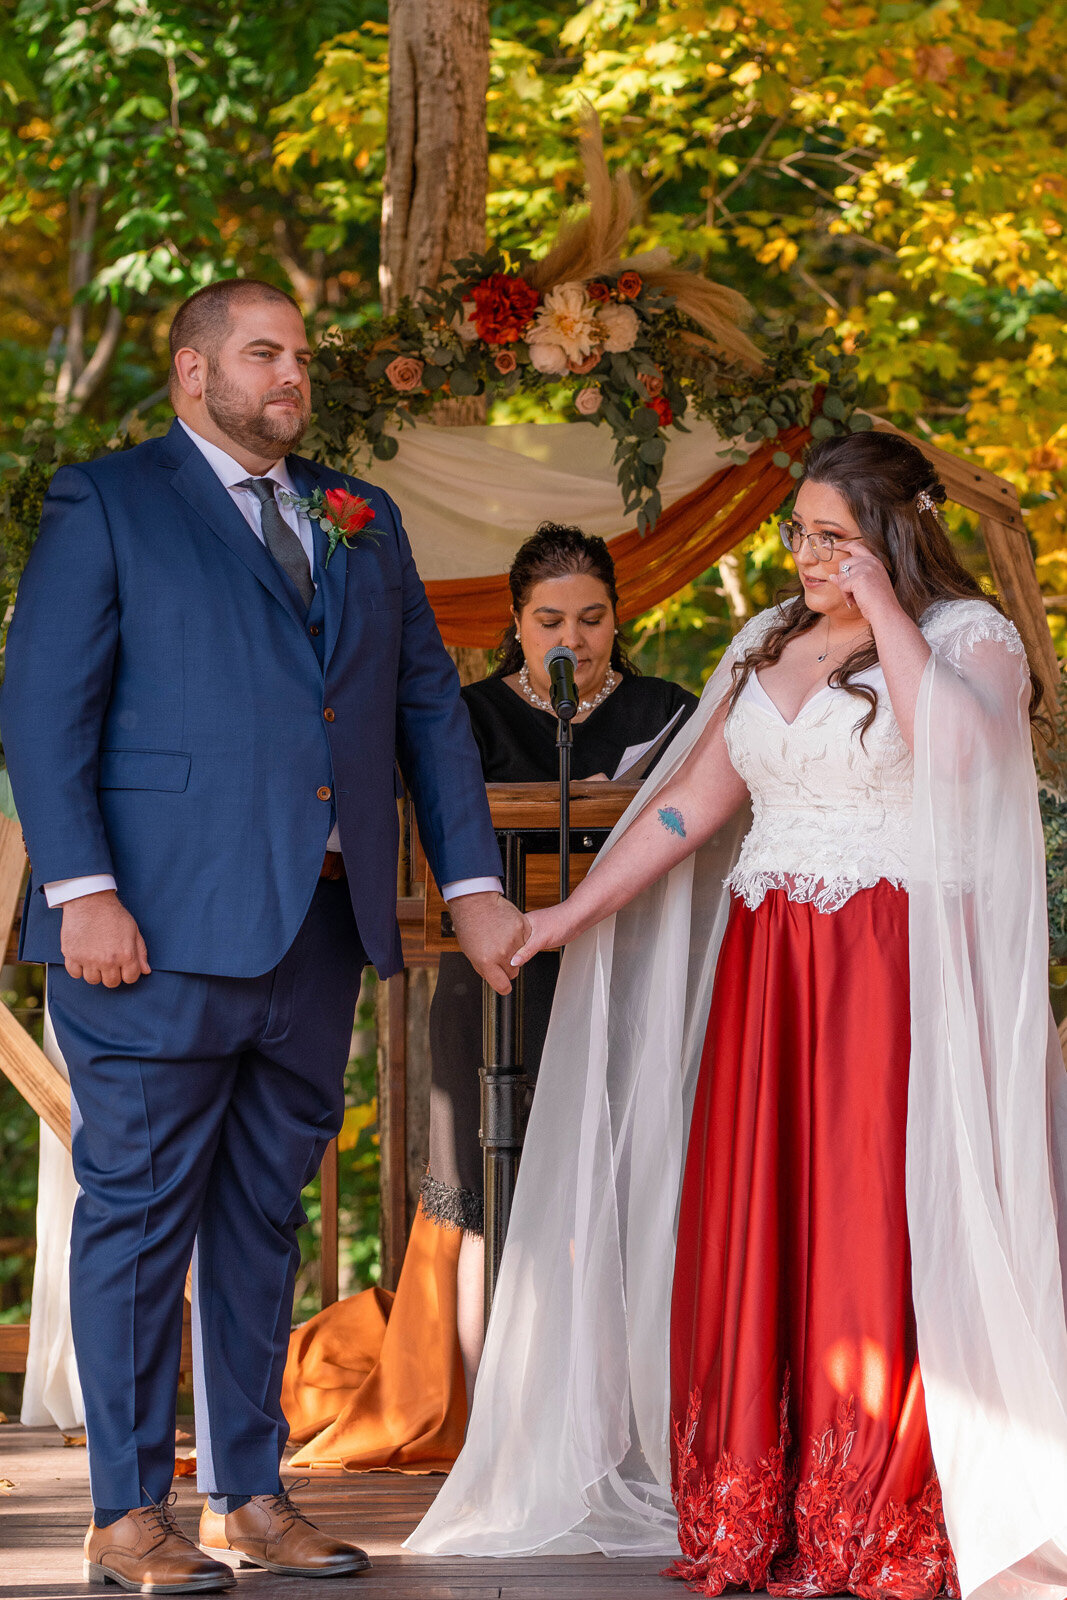 Vallosio-Photo-and-Film_bride-groom-crying-ceremony